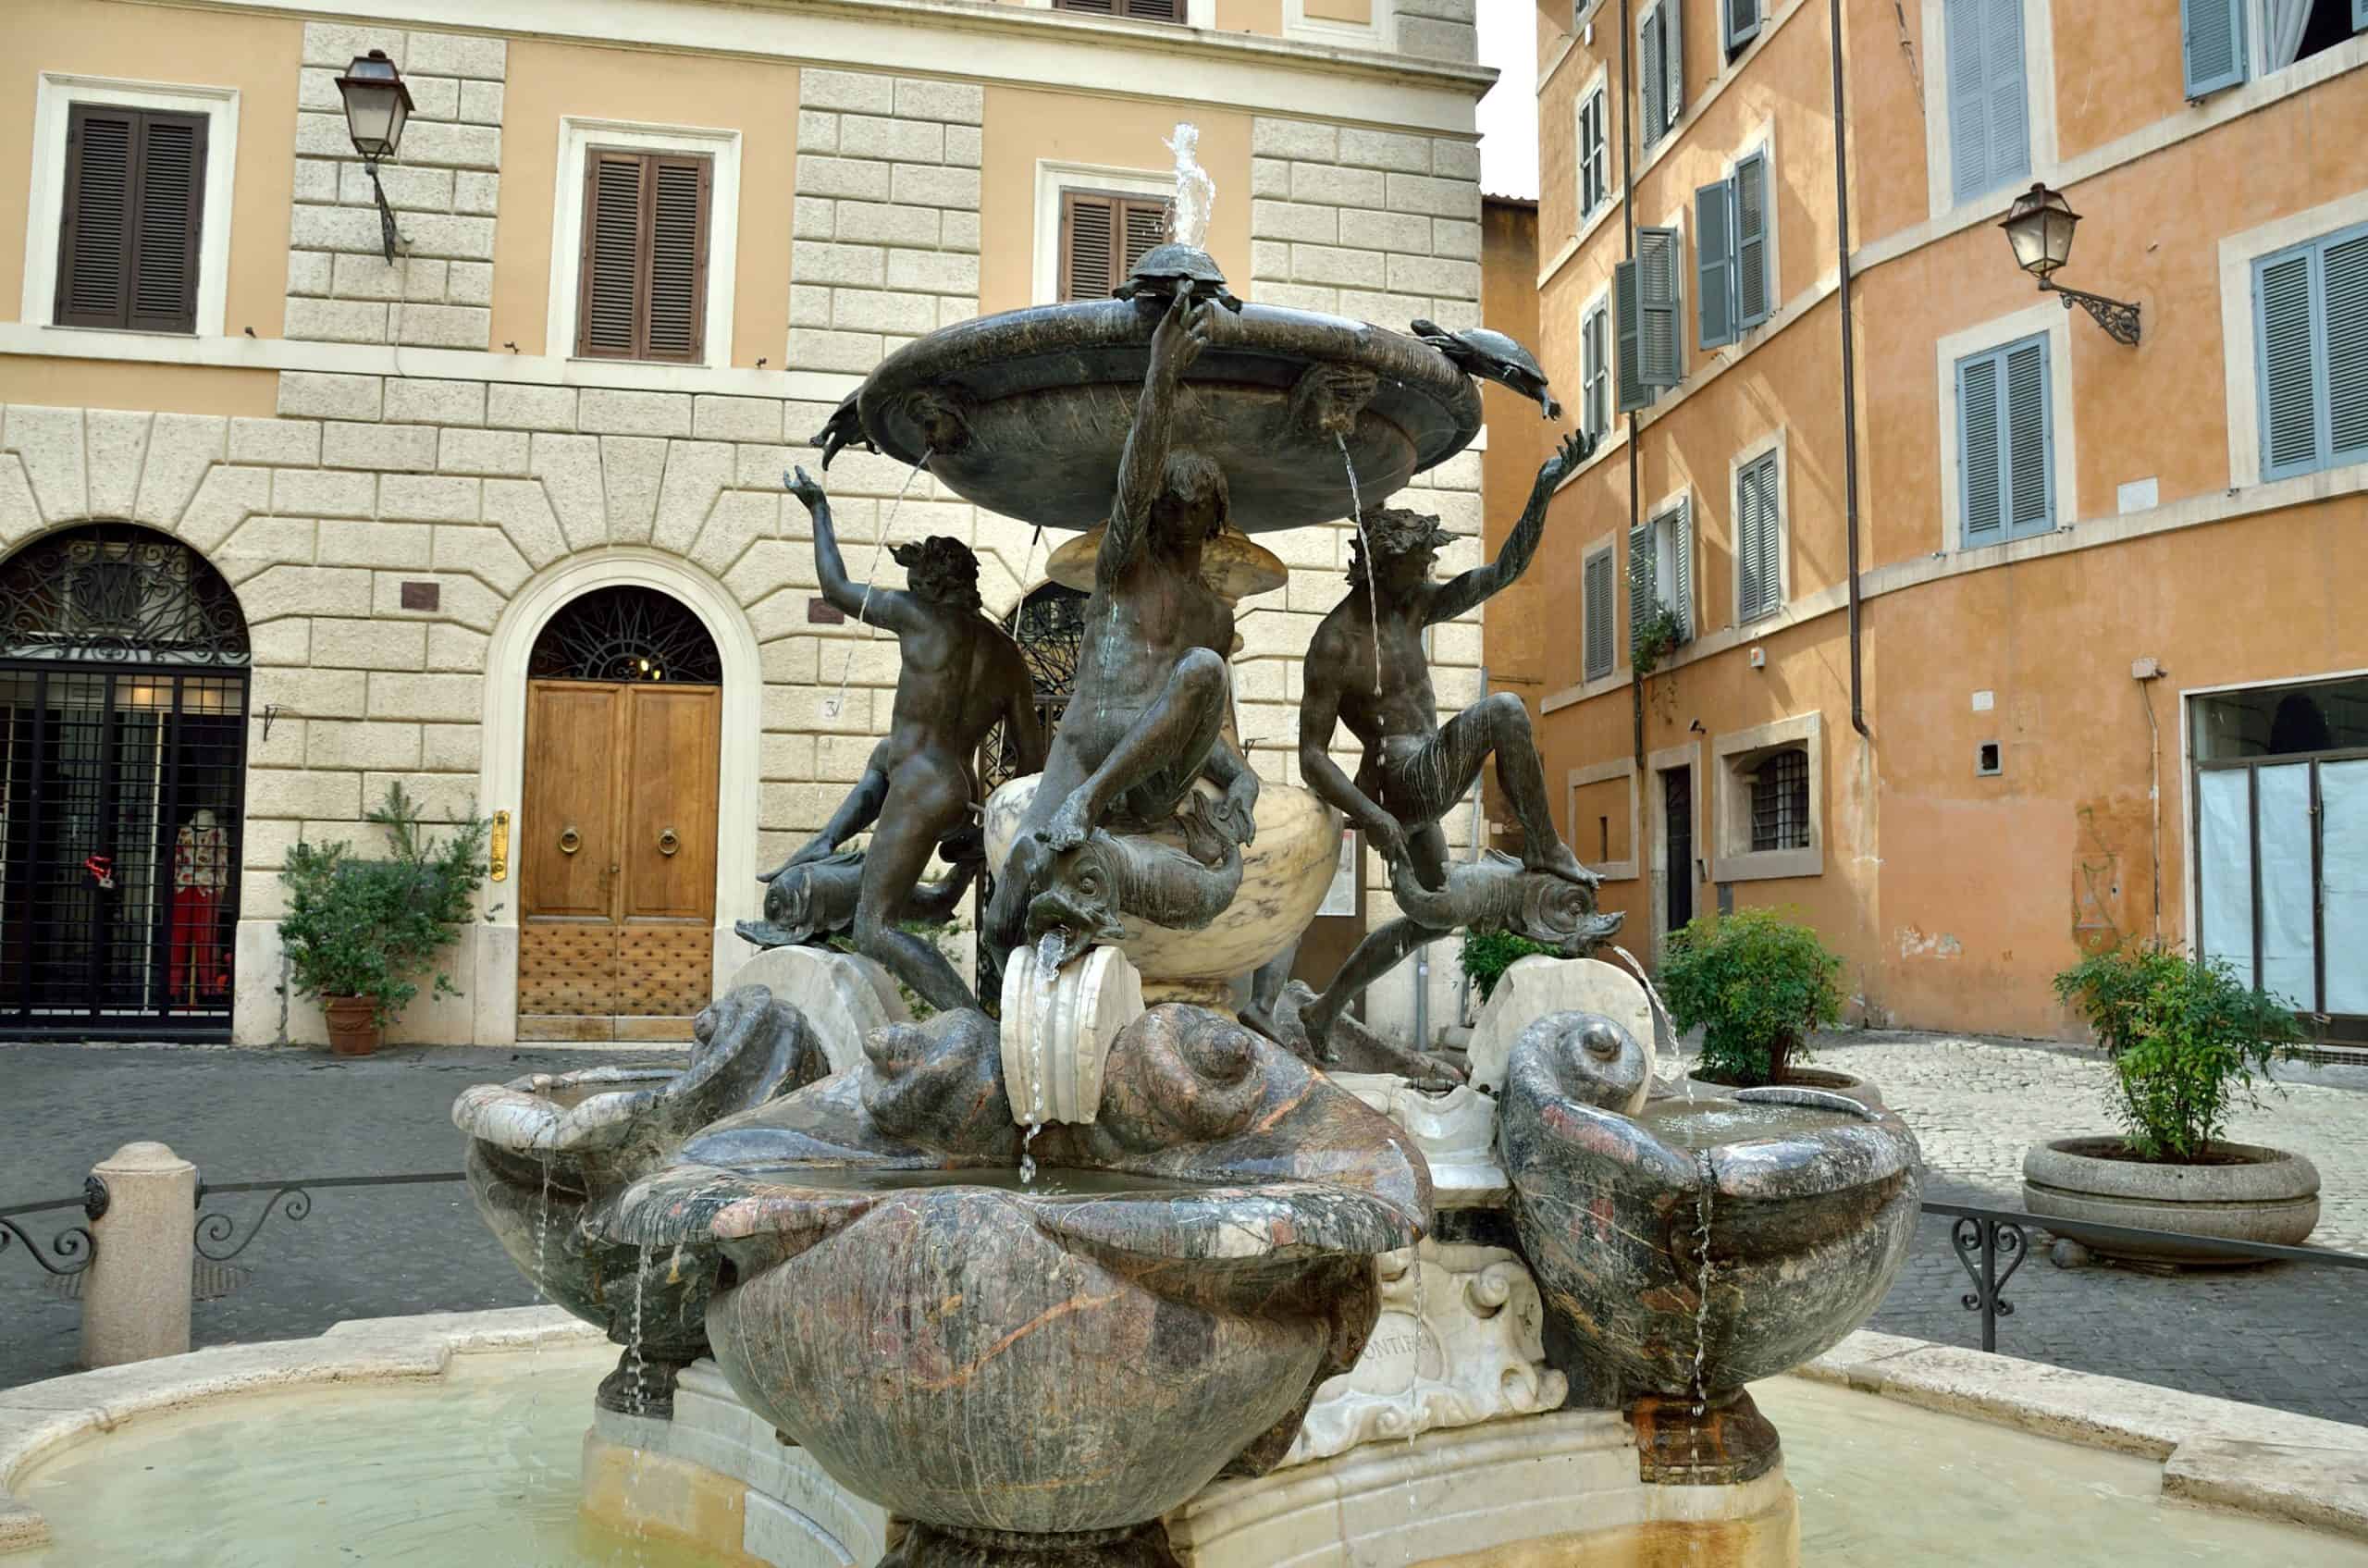 Turtle Fountain in Piazza Mattei Rome